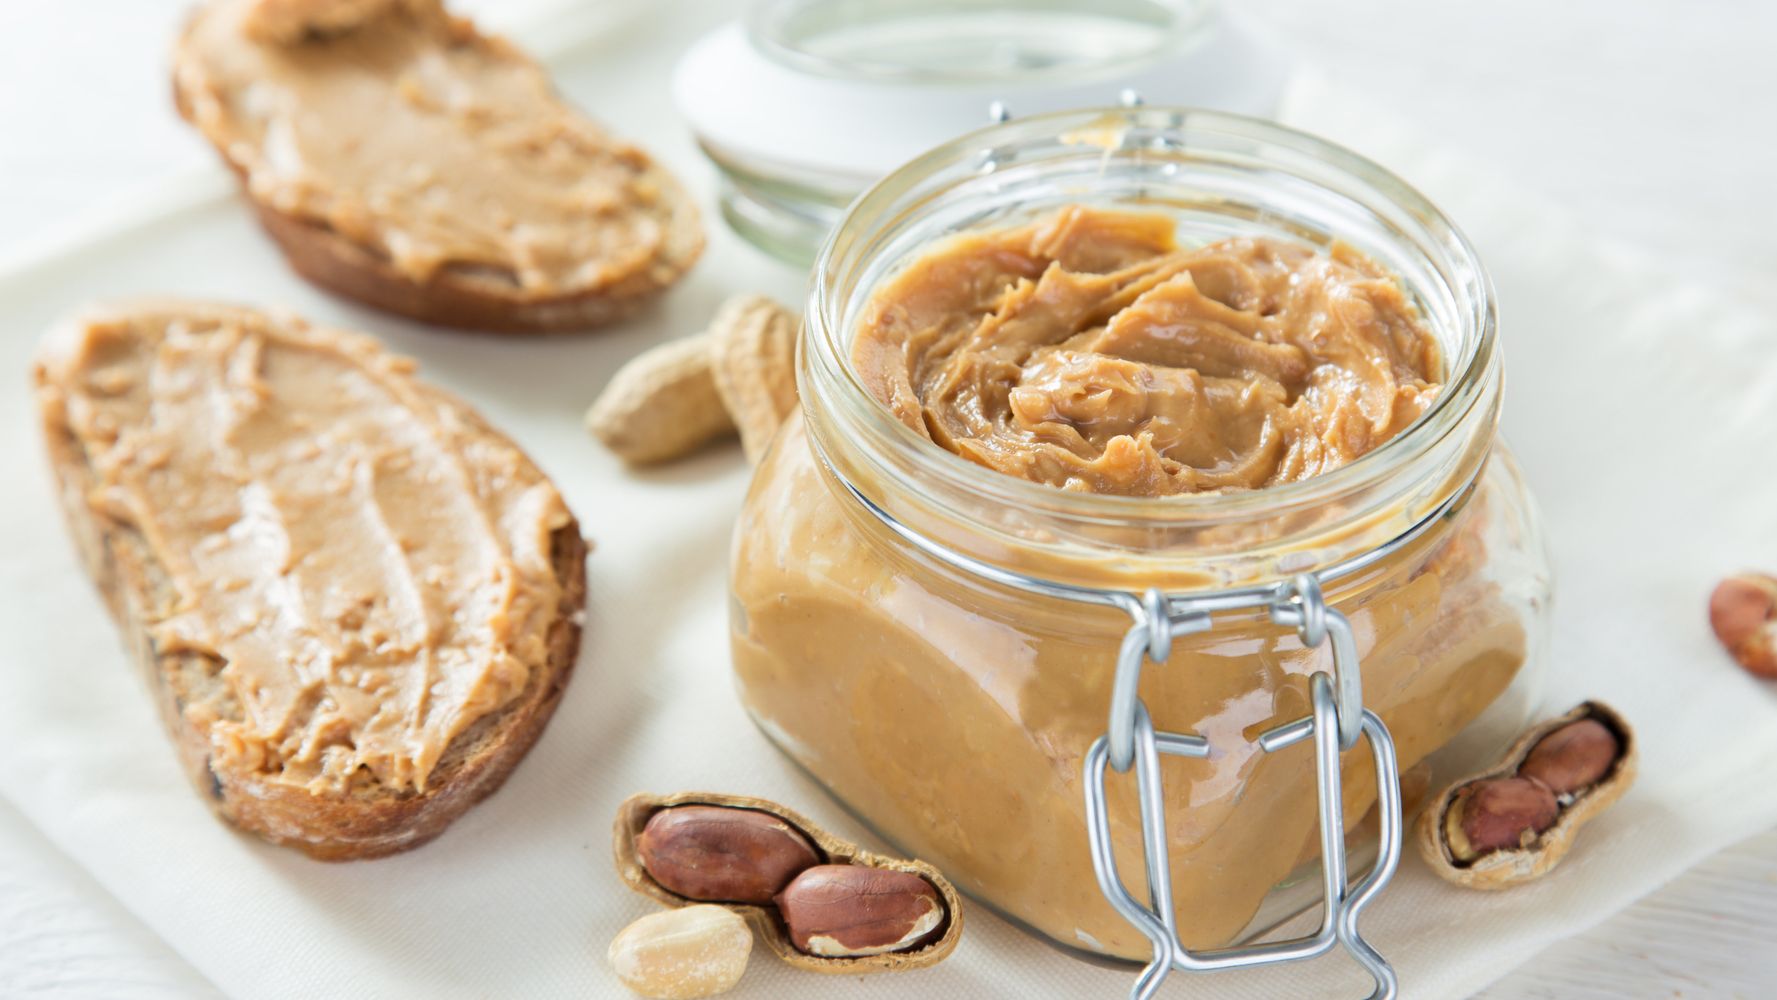 How Do I Stir My Natural Peanut Butter?